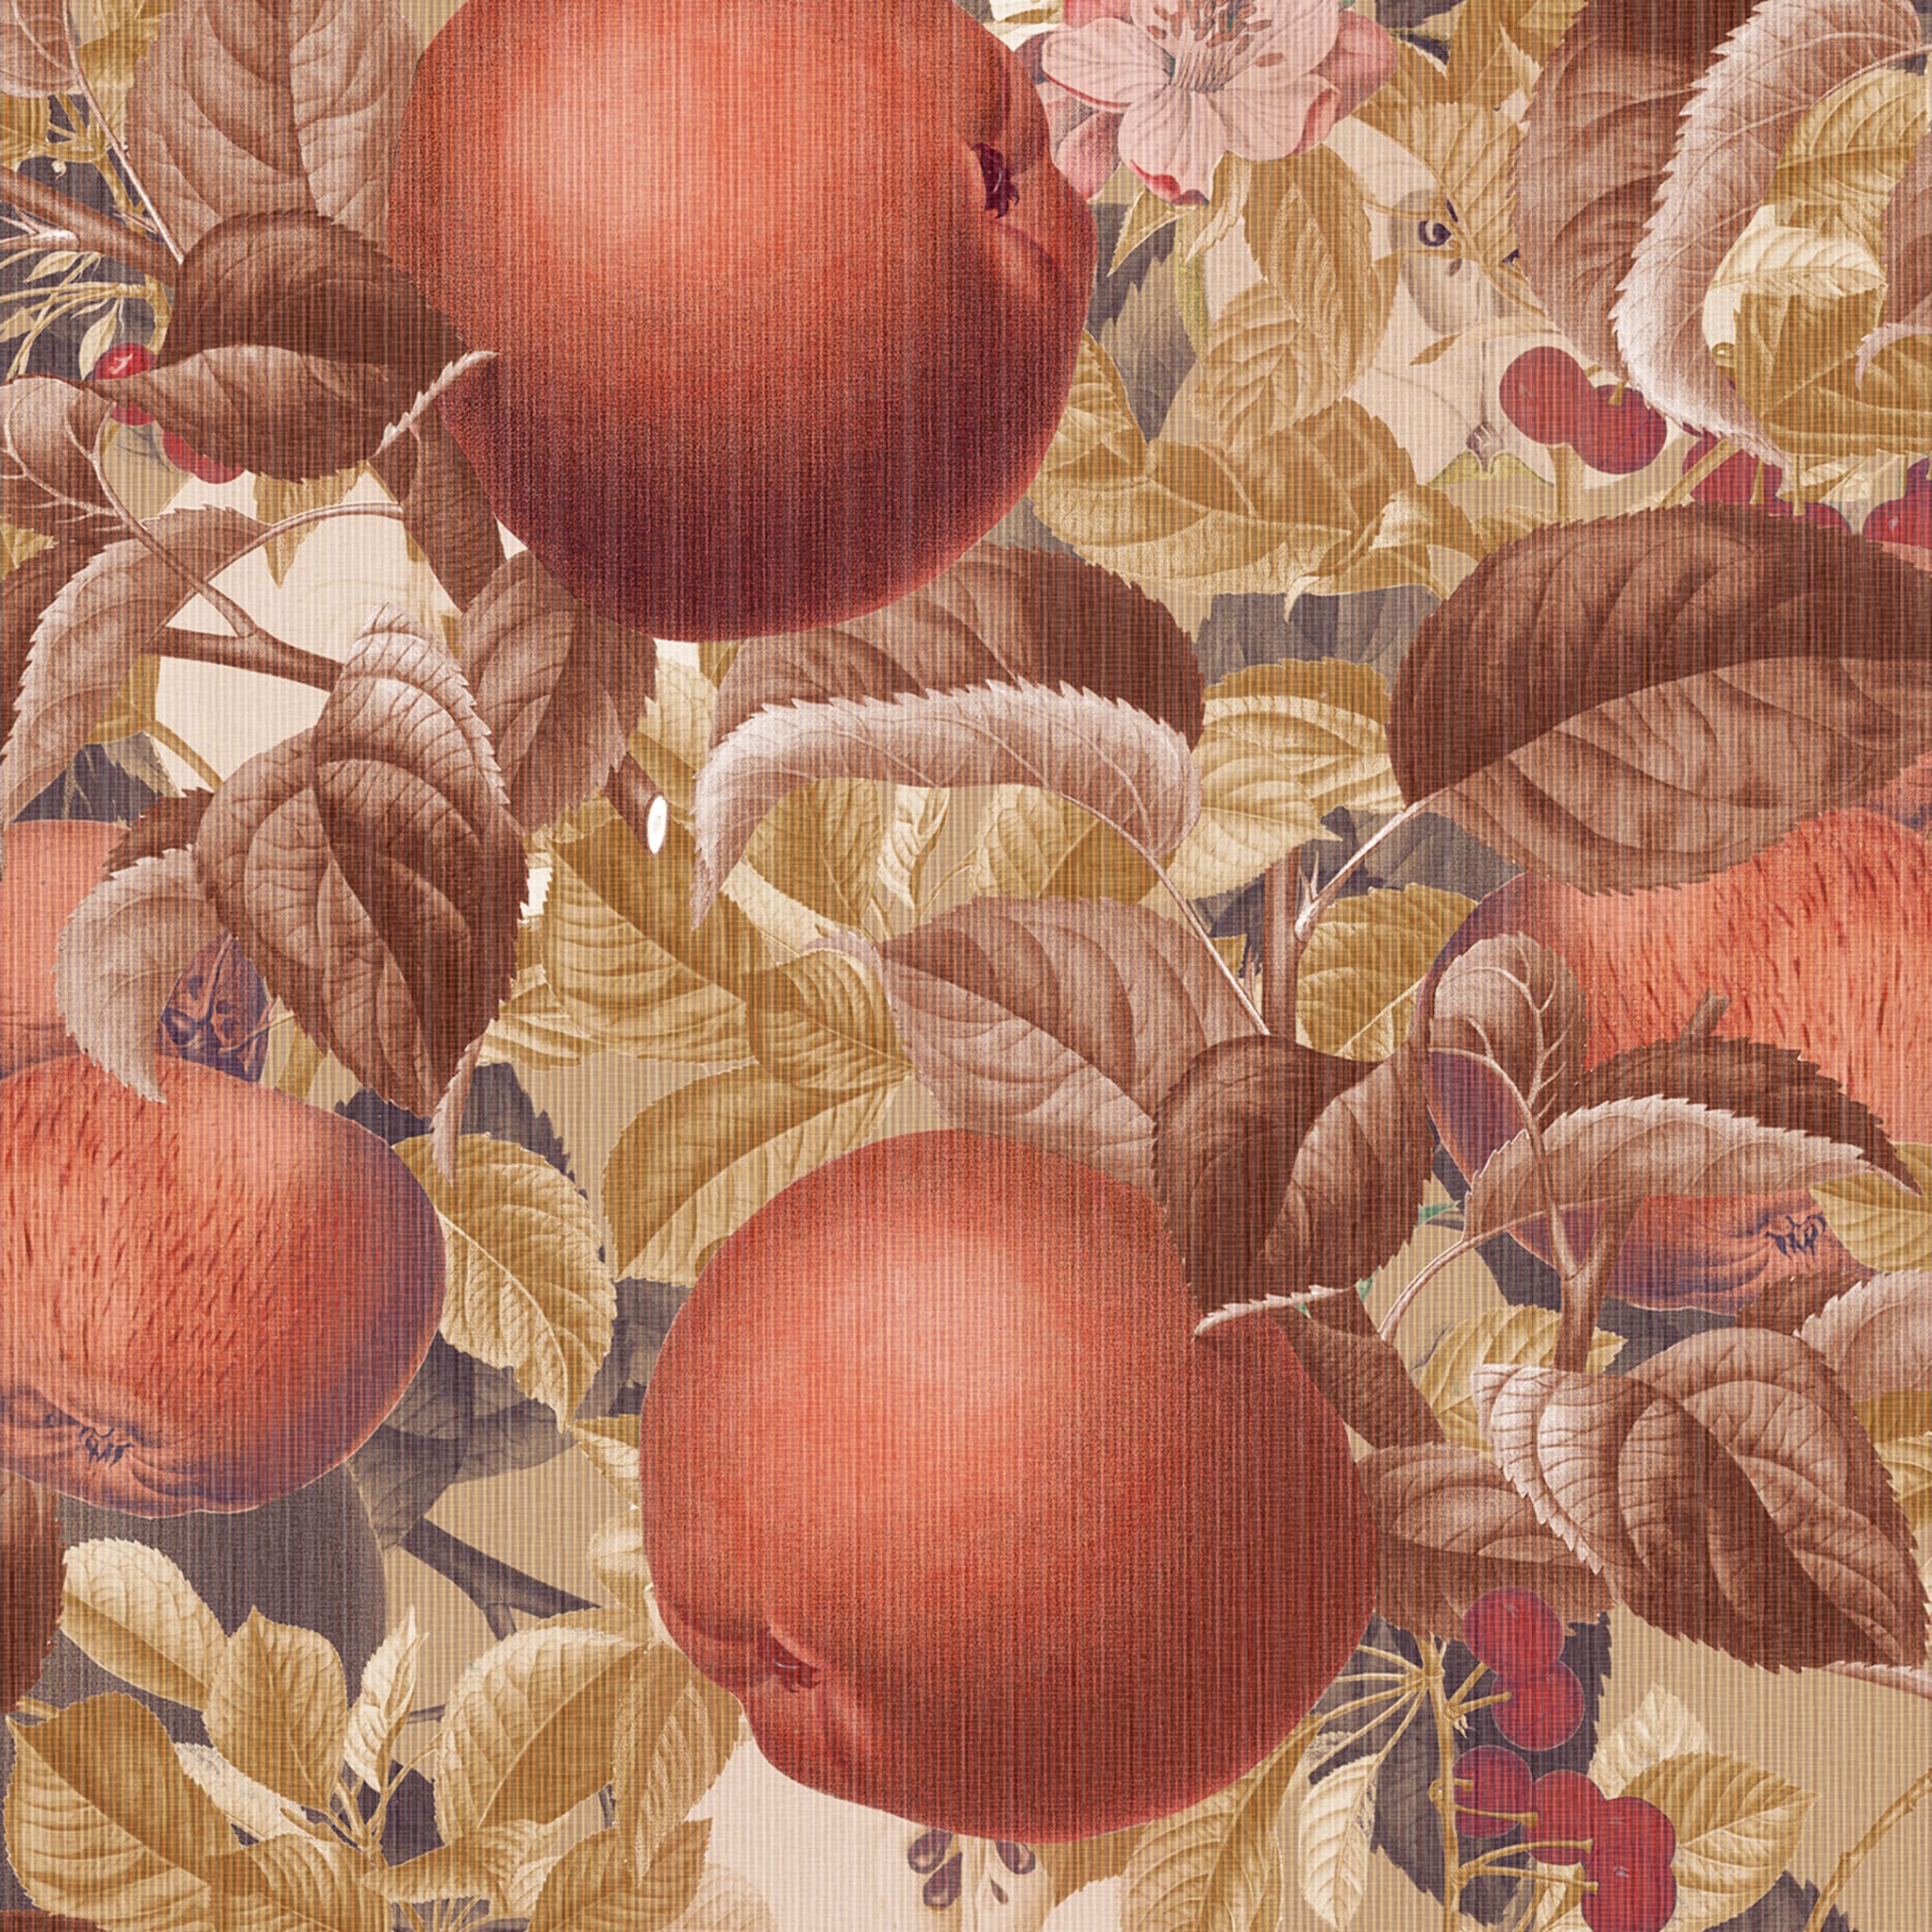 Giant Apple Wallpaper by Vzn Studio - Alternative view 1